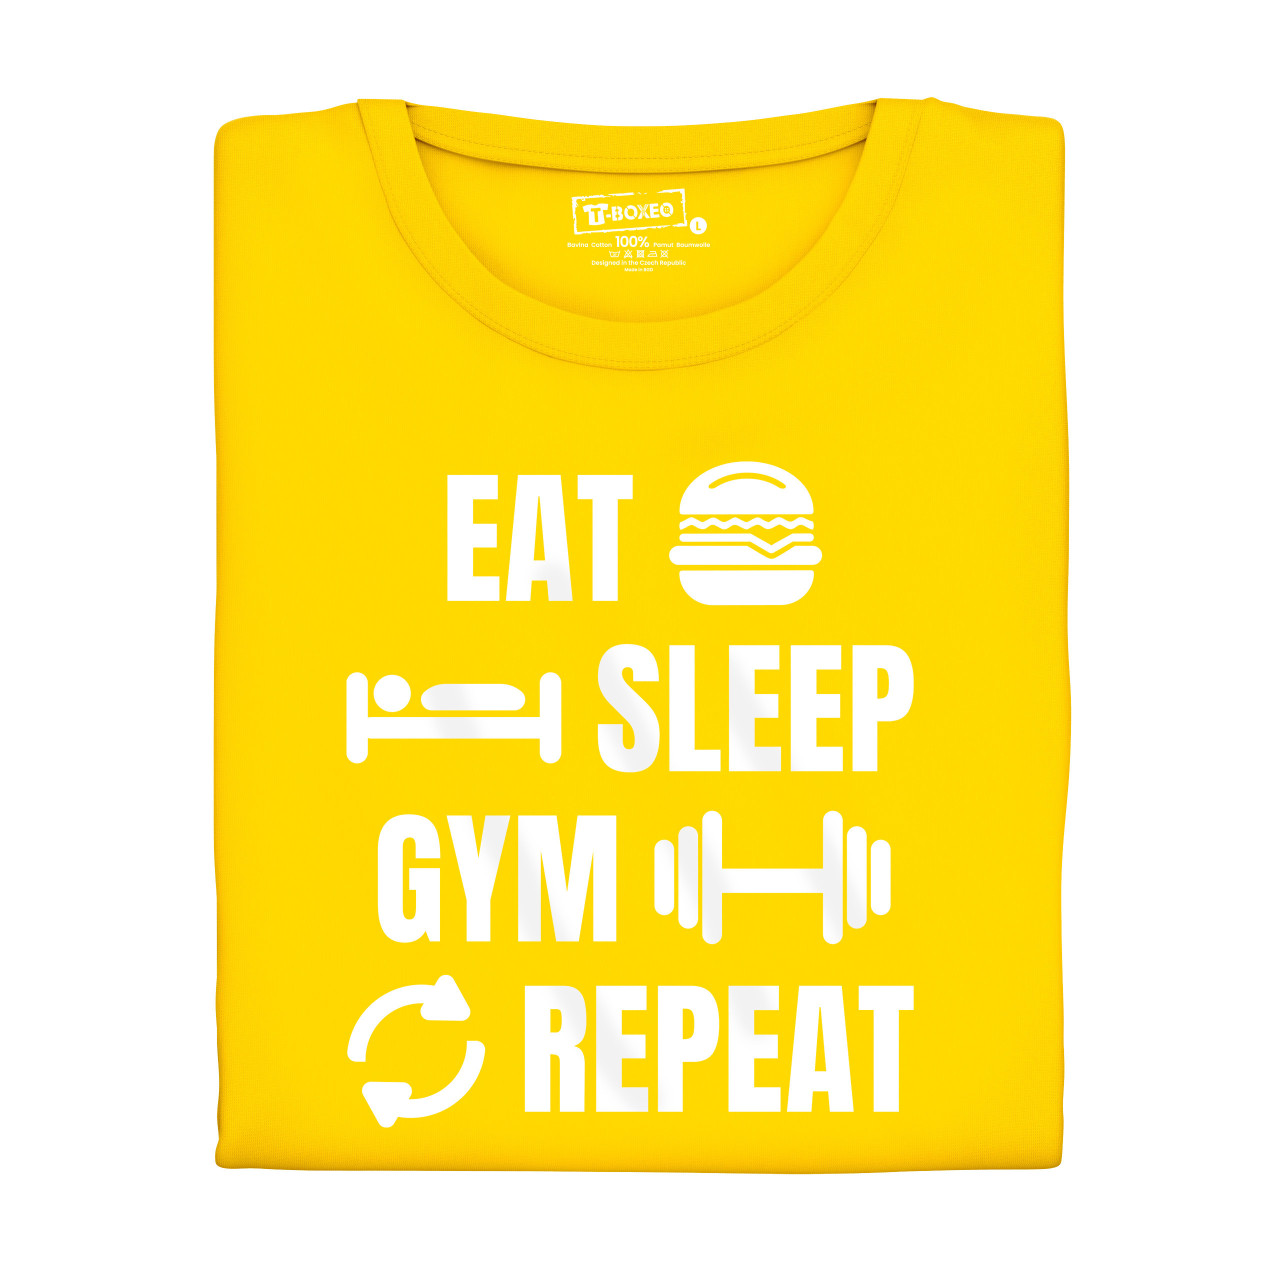 Pánské tričko s potiskem “Eat, Sleep, Gym, Repeat”